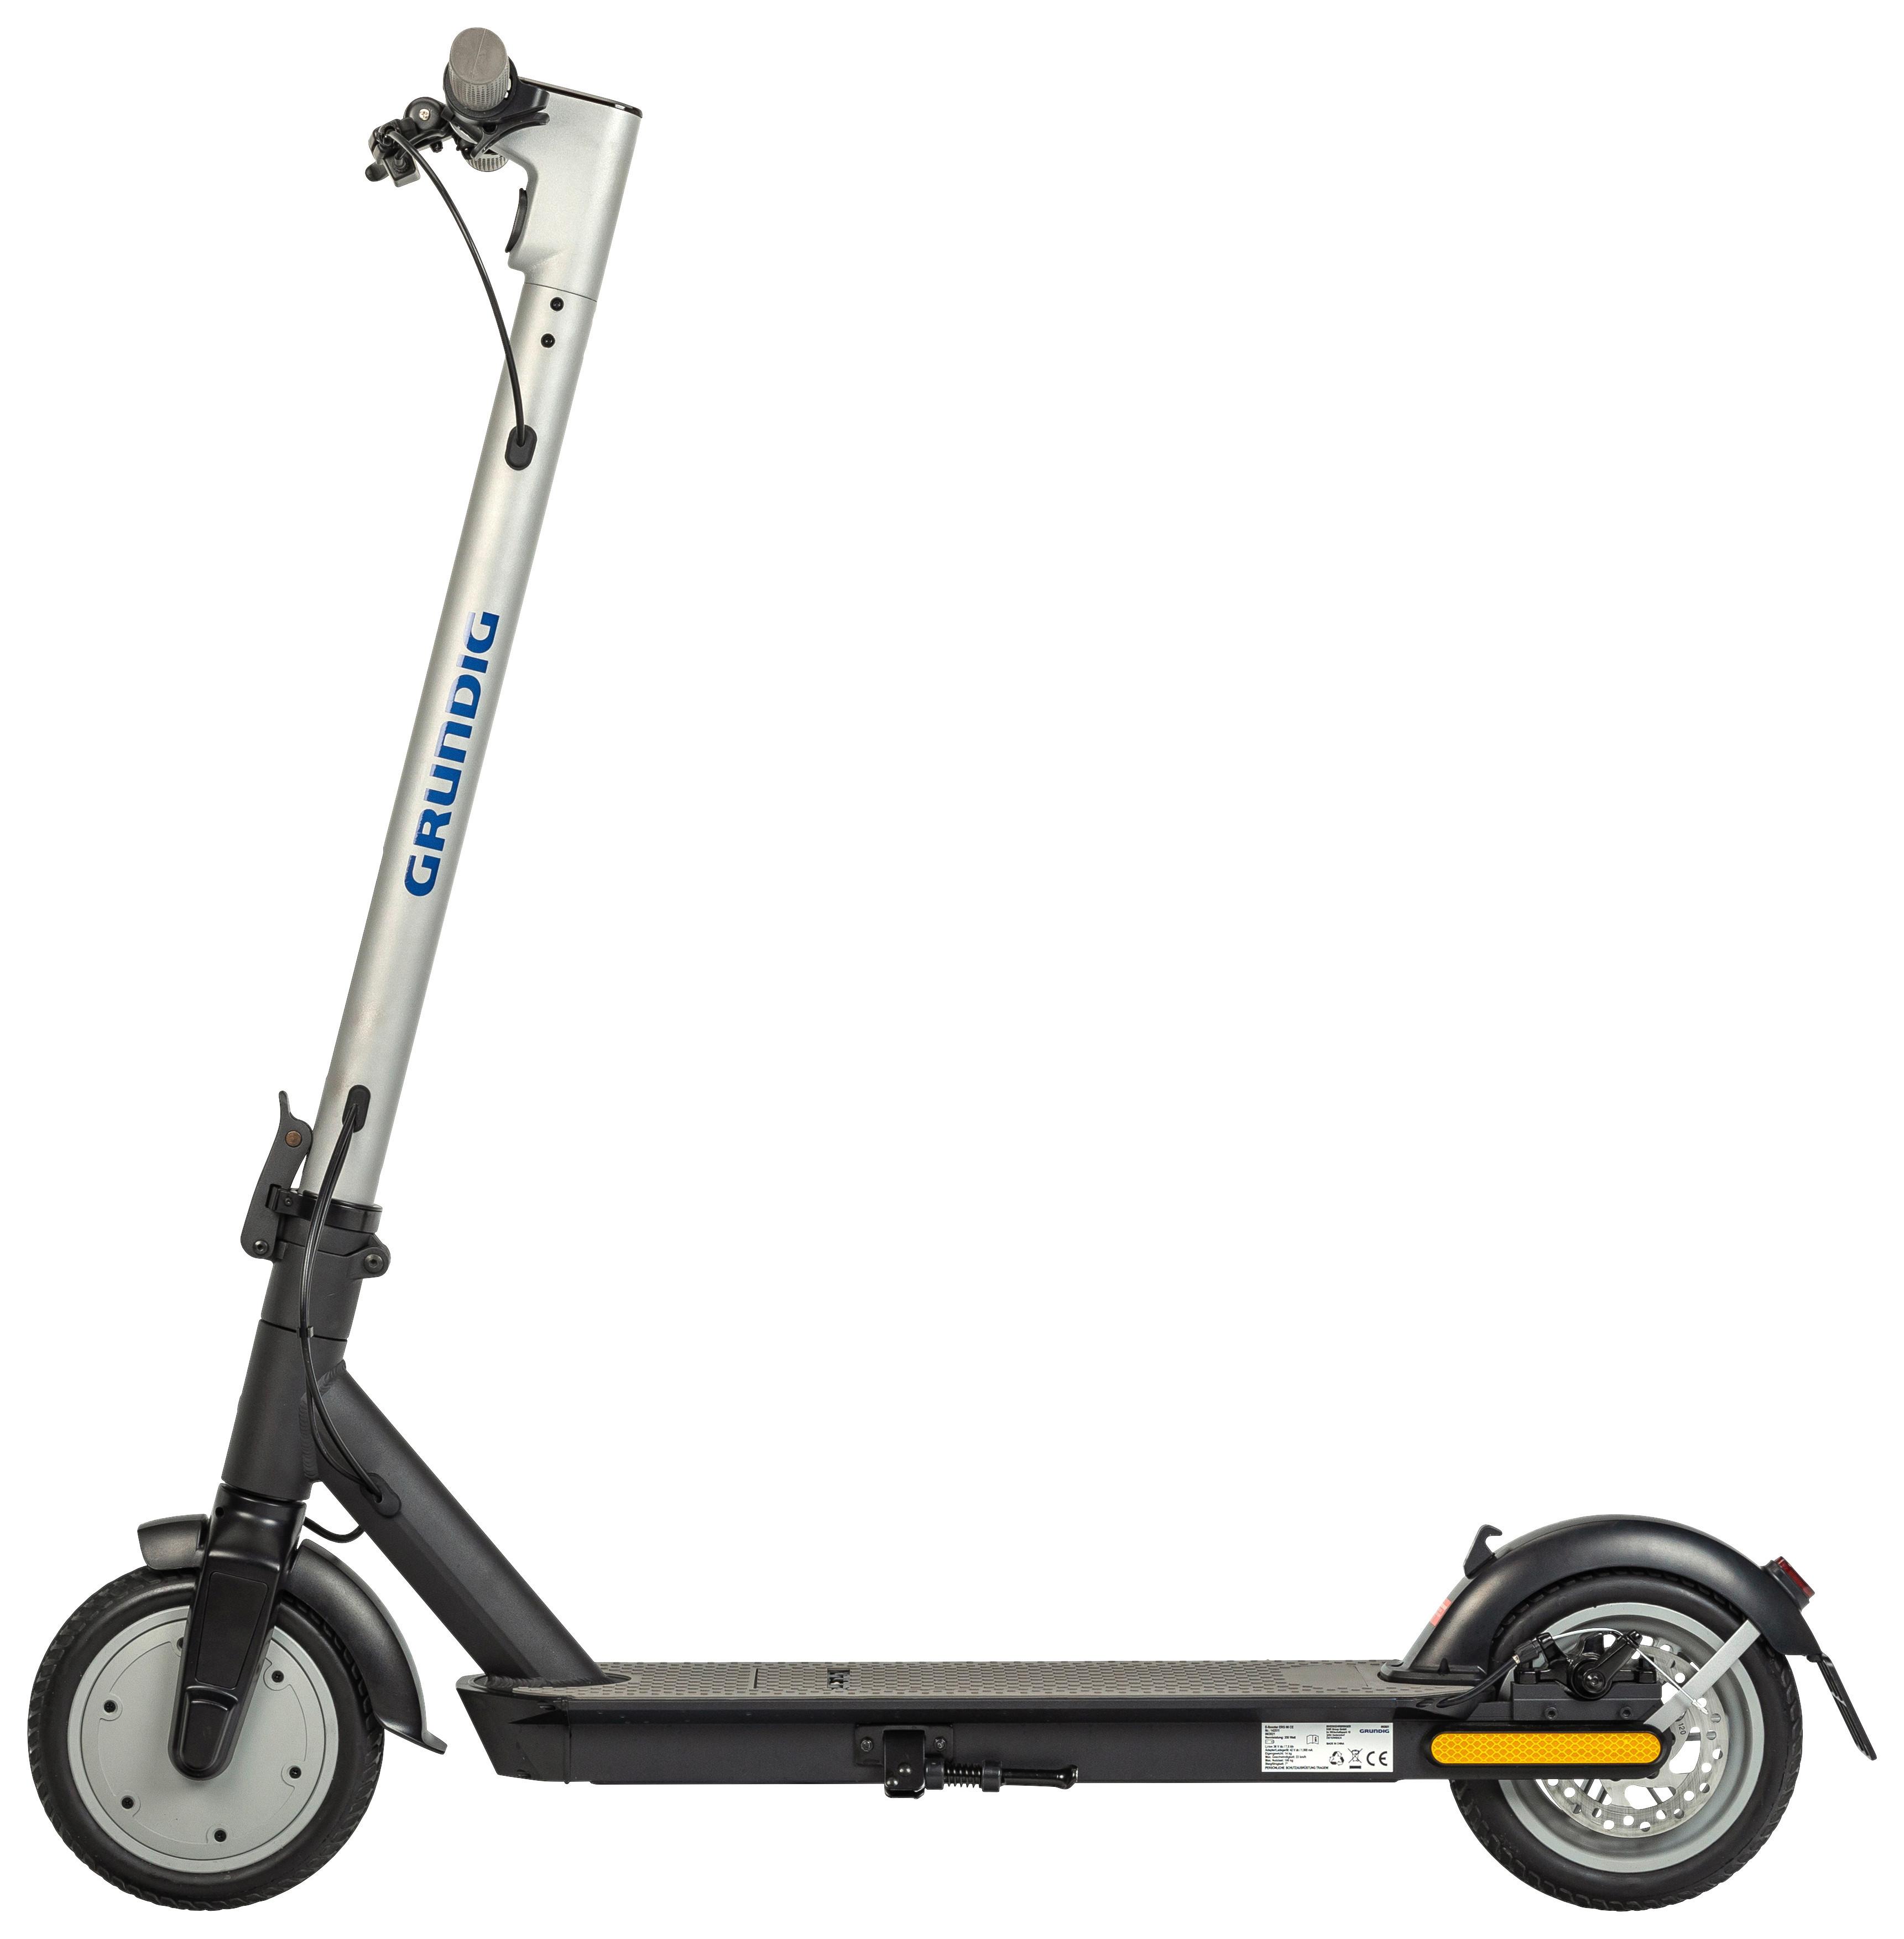 E-Scooter Klappbar inkl. Digitaler Tachoanzeige - Schwarz/Grau, Basics, Kunststoff/Metall (116/43/114,5cm) - Grundig